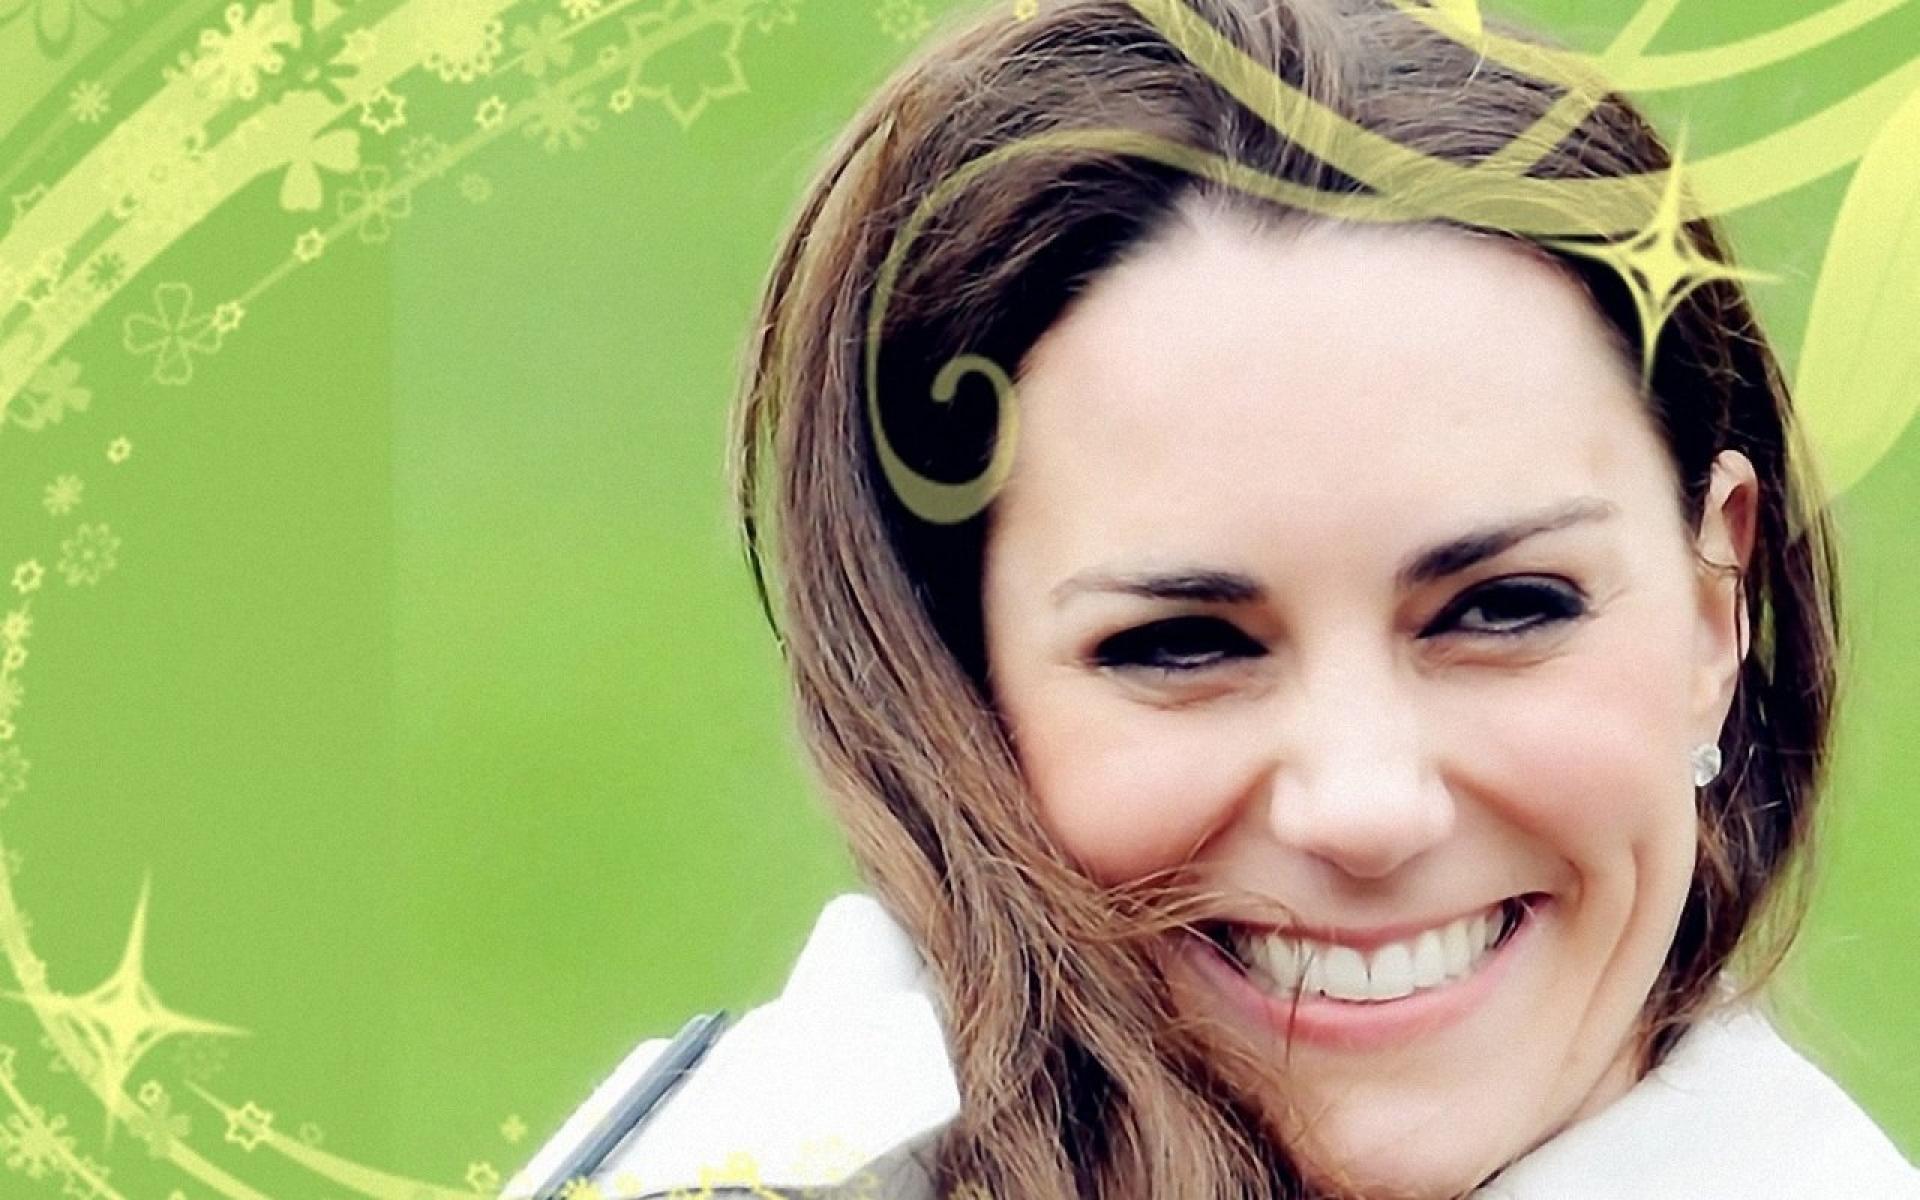 Cupidion: Kate Middleton HD Wallpaper Image